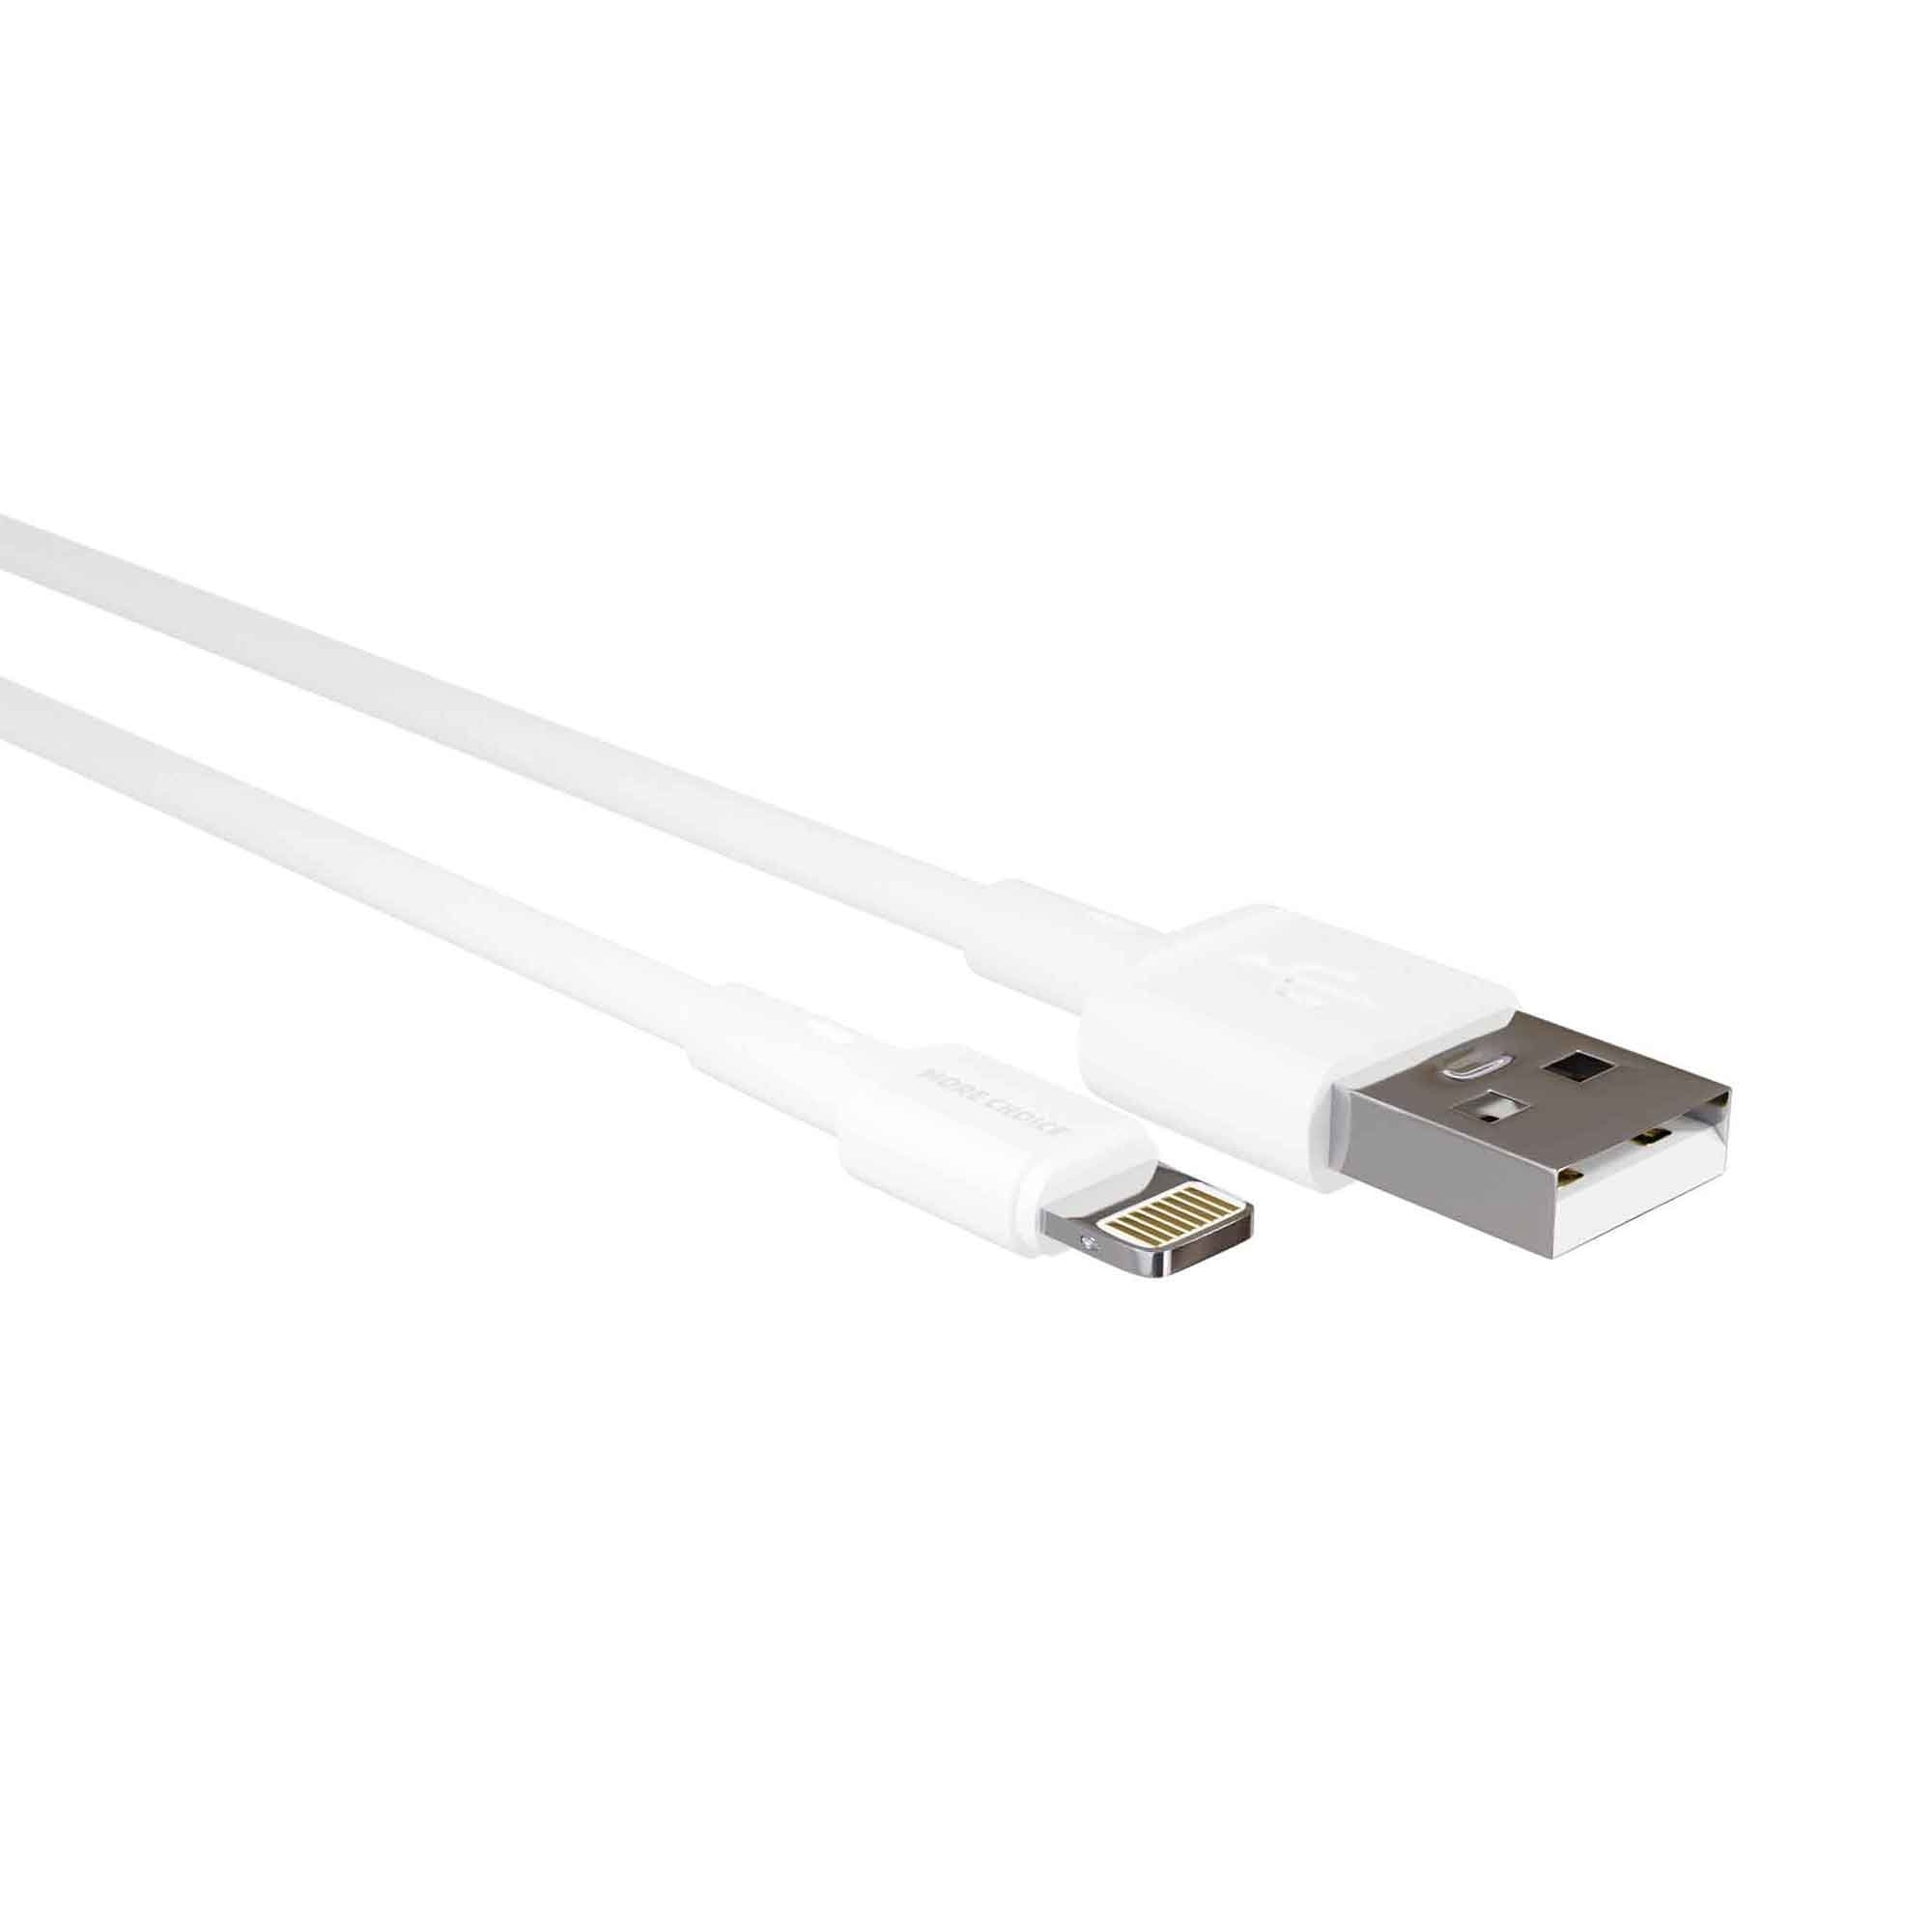 Дата-кабель More choice K14i TPE 2.0A Lightning 8-pin White USB дата кабель usb 2 0a для lightning 8 pin more choice k14i tpe 3м white